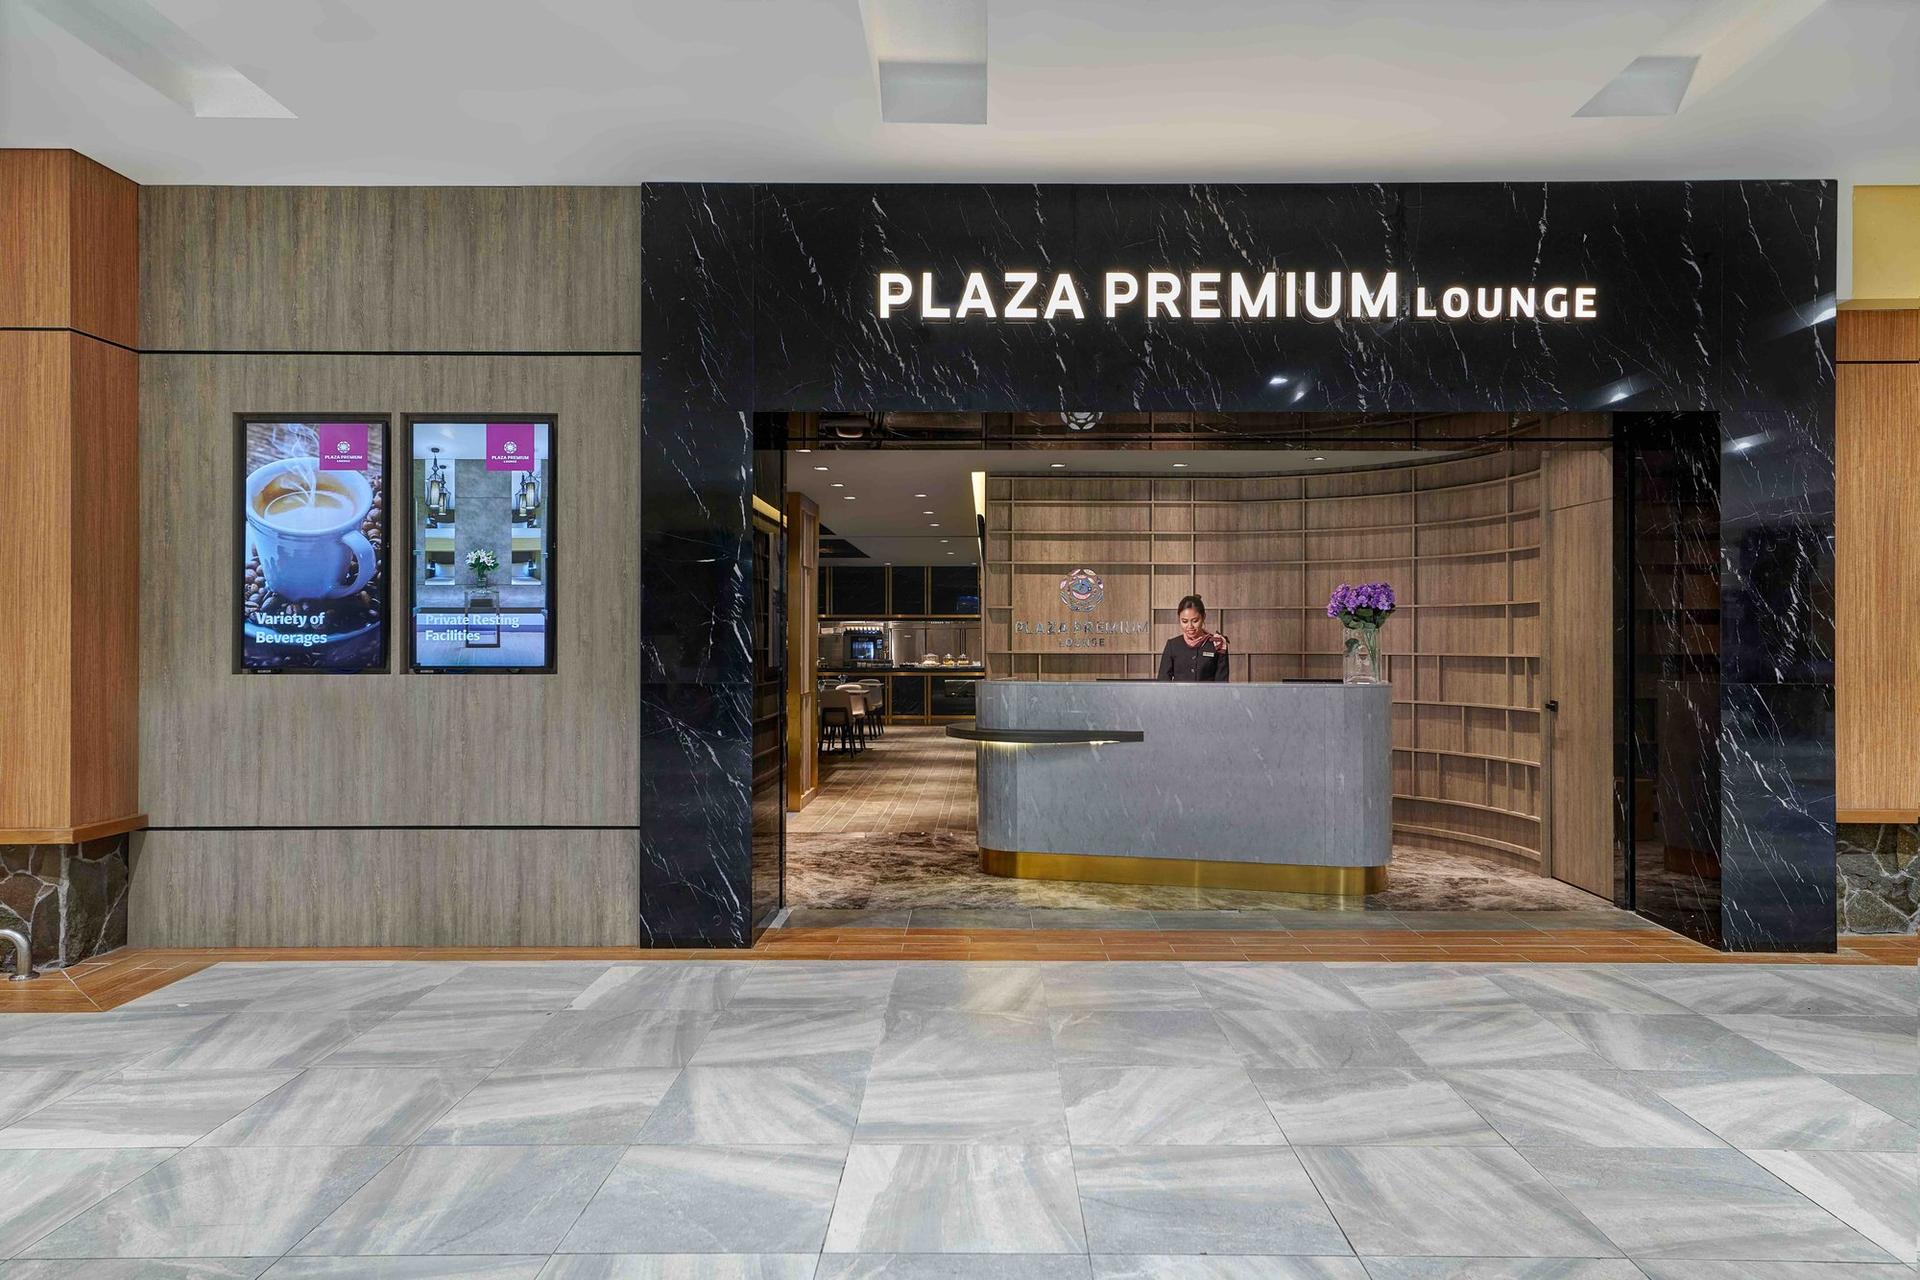 Plaza Premium Lounge image 17 of 26